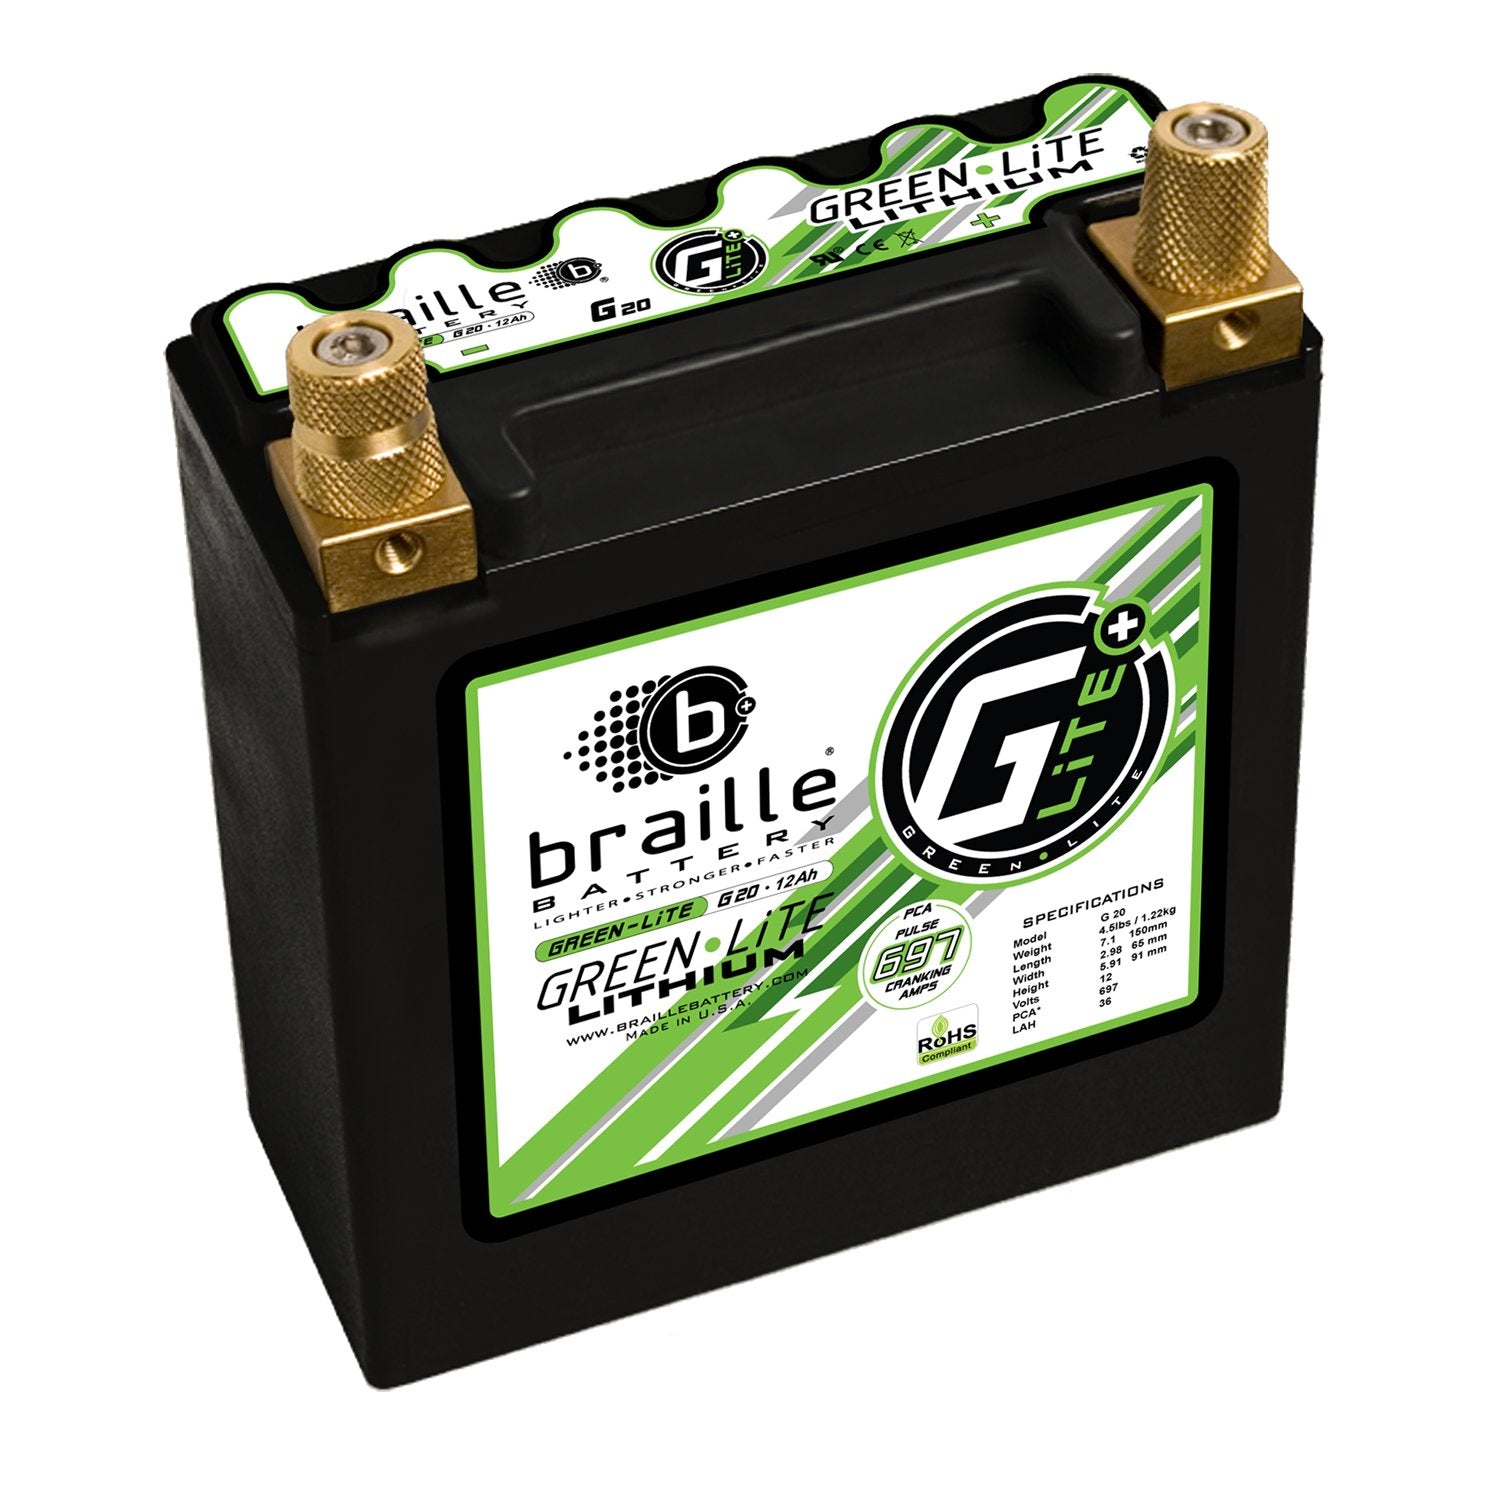 Braille GreenLite (Automotive Spec) Lithium battery - 4lbs